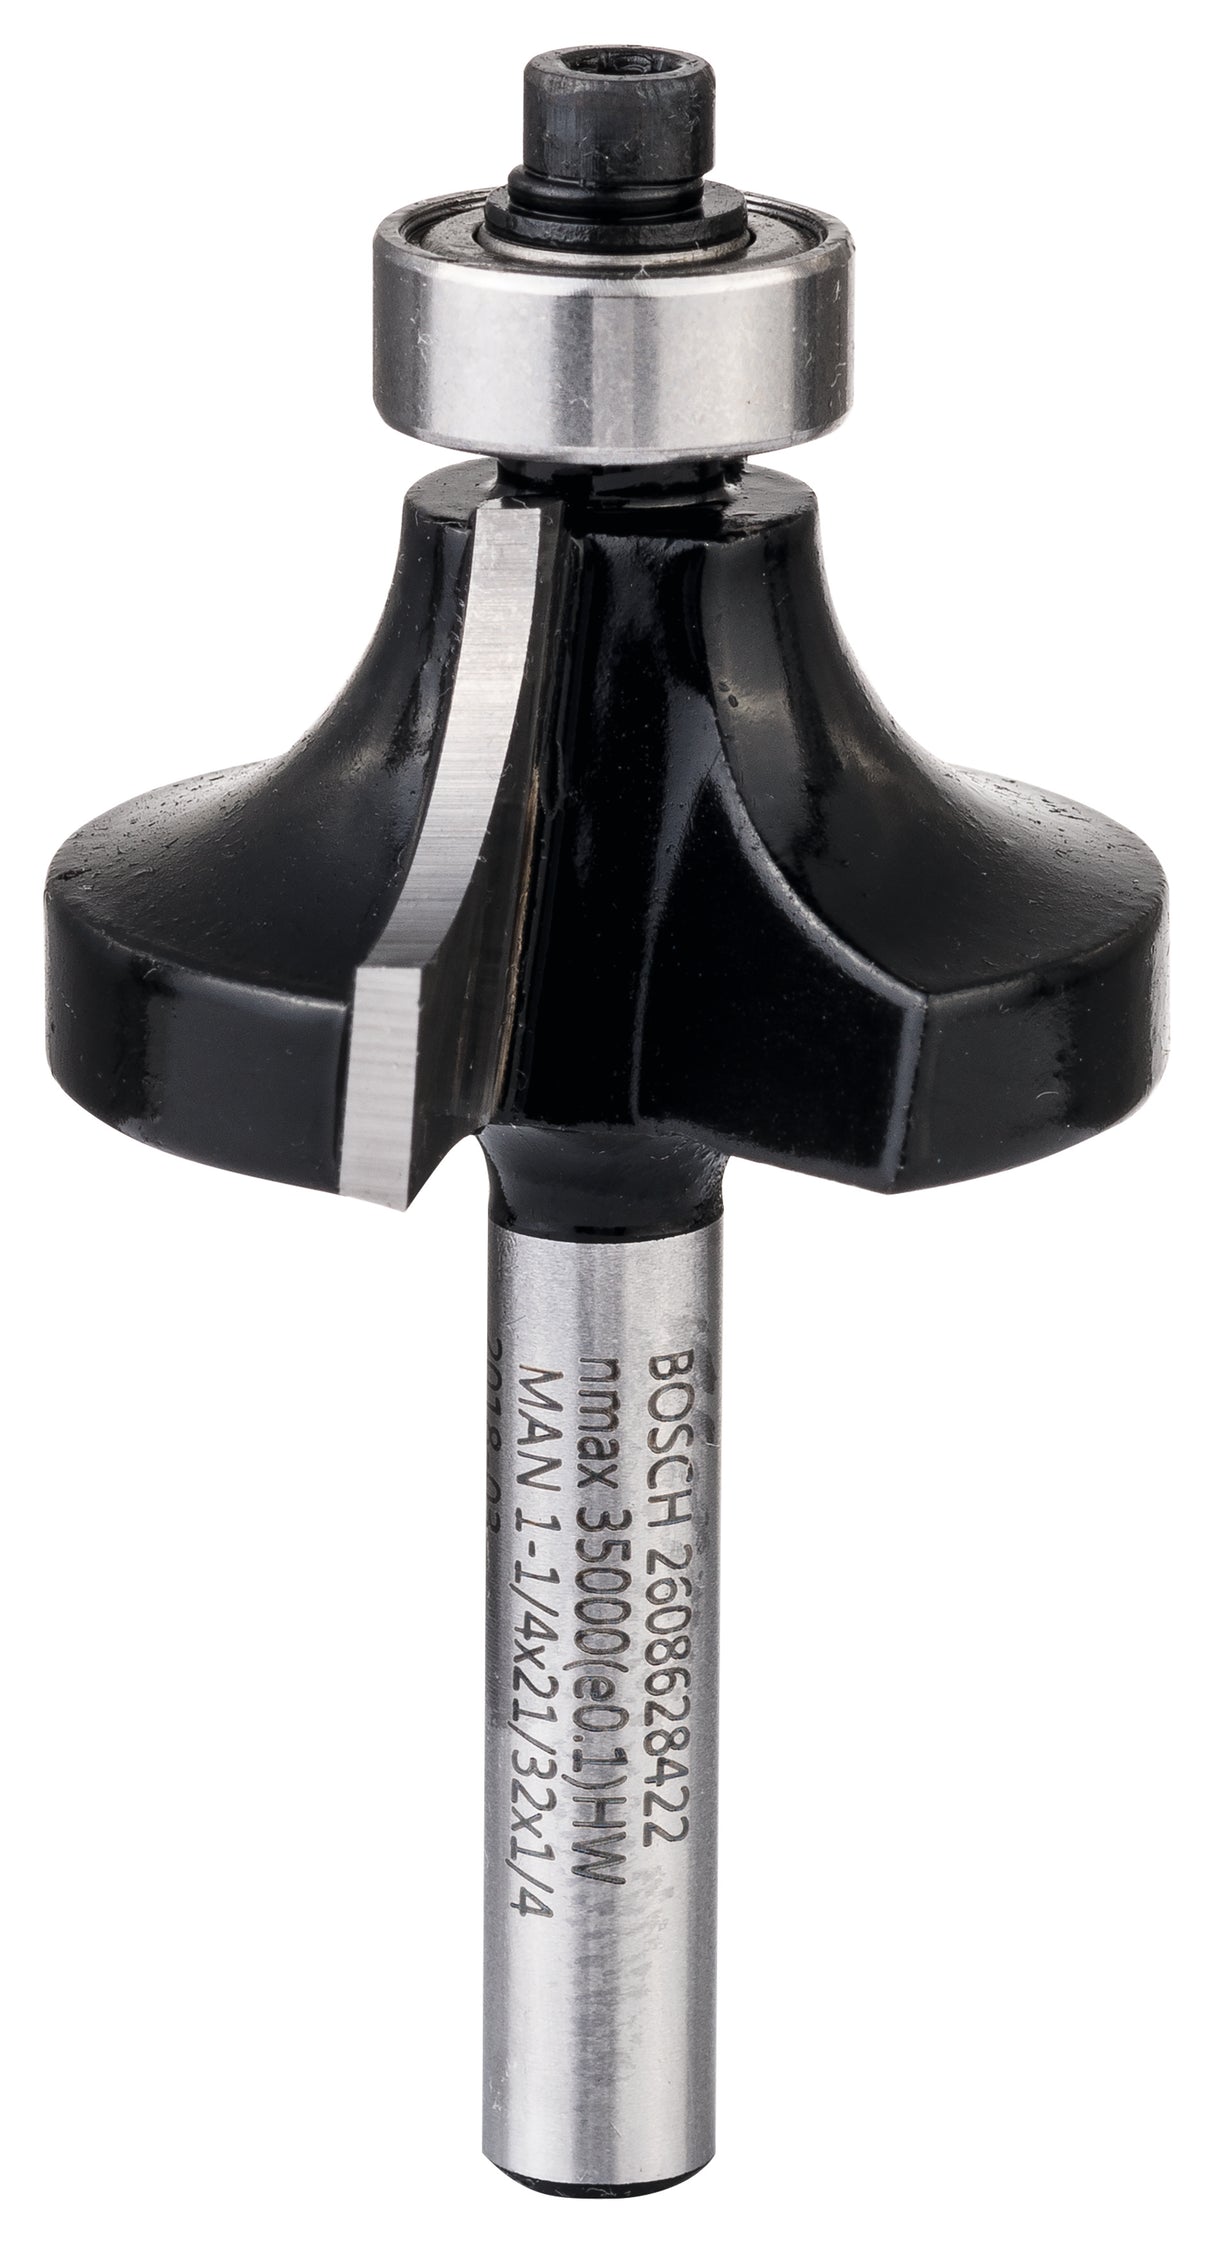 Bosch Professional Beading Bit - 1/4" Shank, R9.5mm, 16.7mm Diameter, 9.5mm Depth